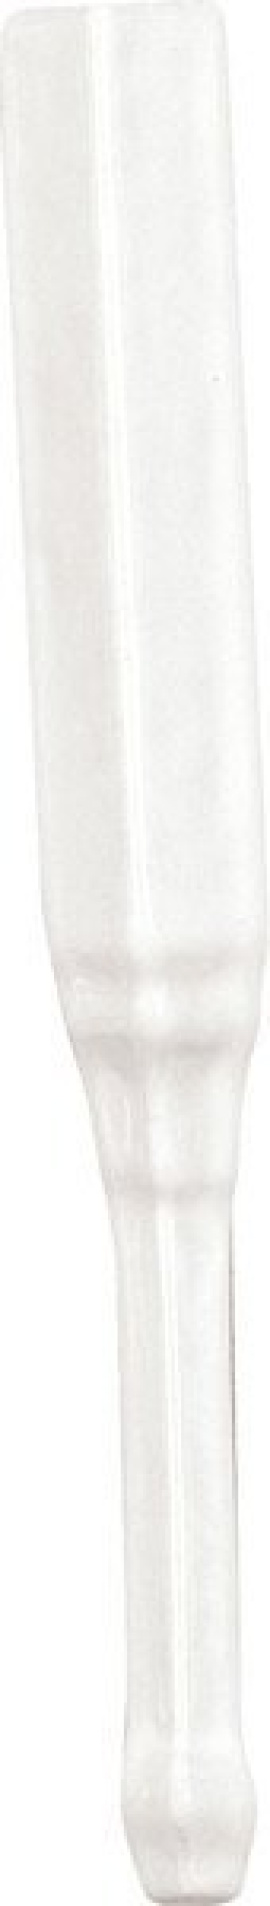 NERI Angulo Exterior Rodápie Classico Blanco Z, (ADP46)